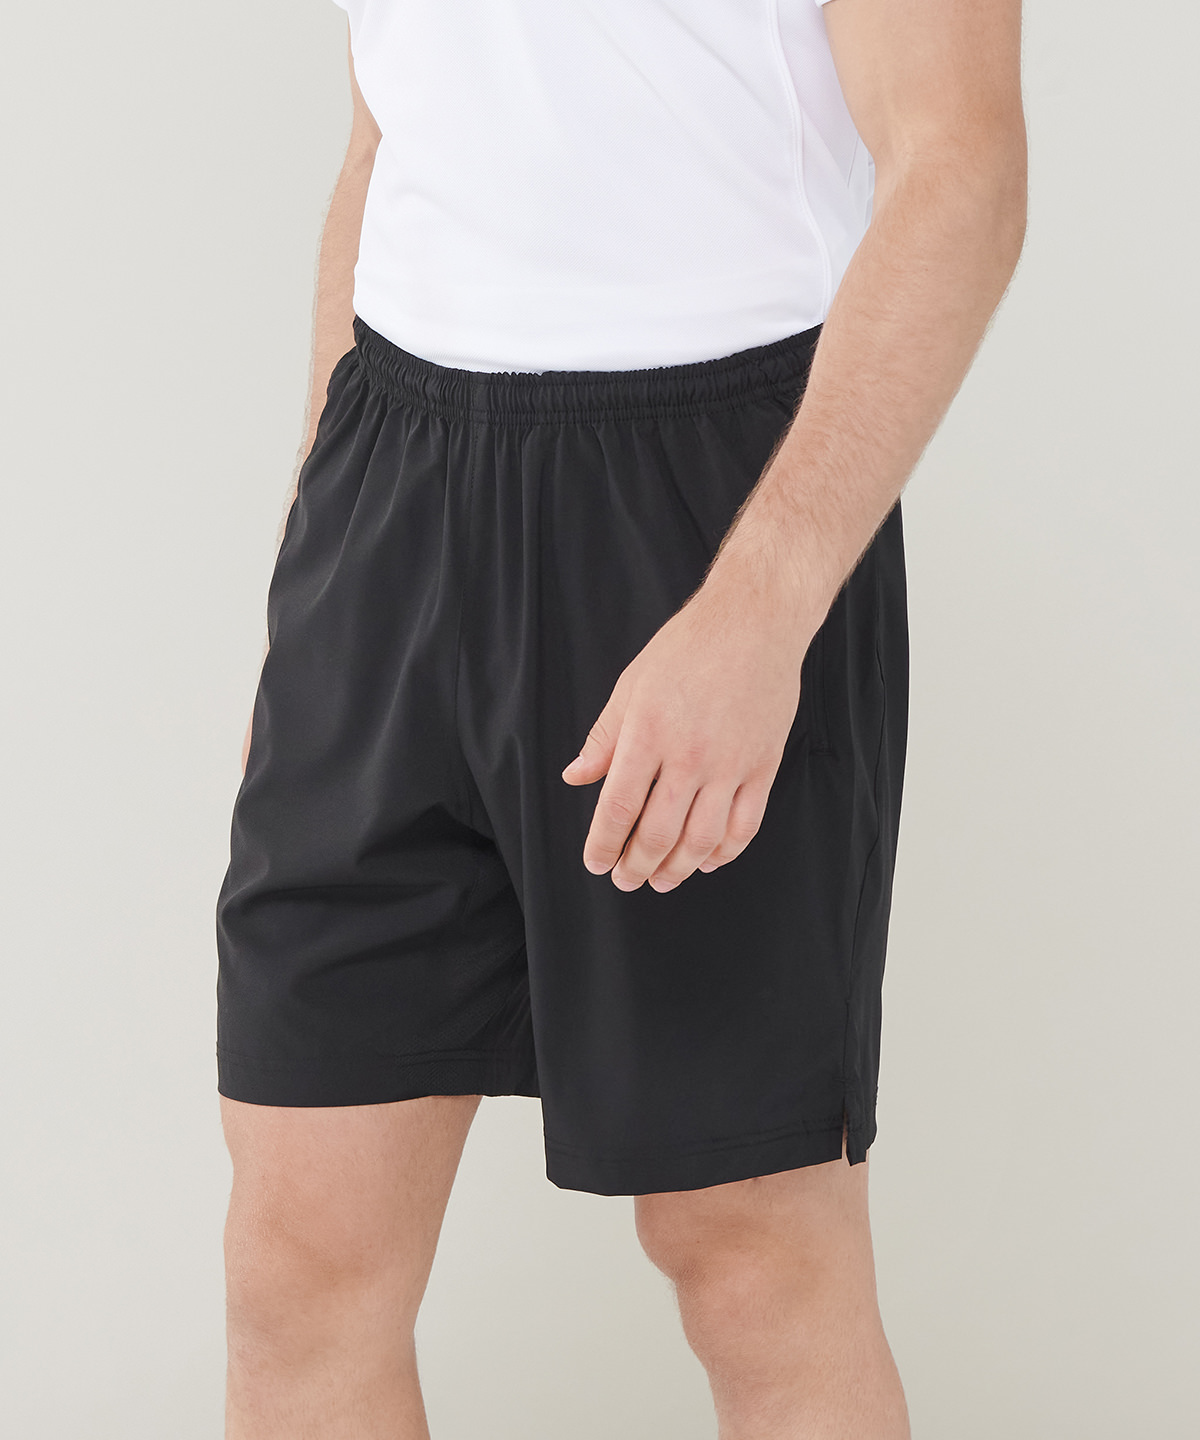 Pro stretch sports shorts